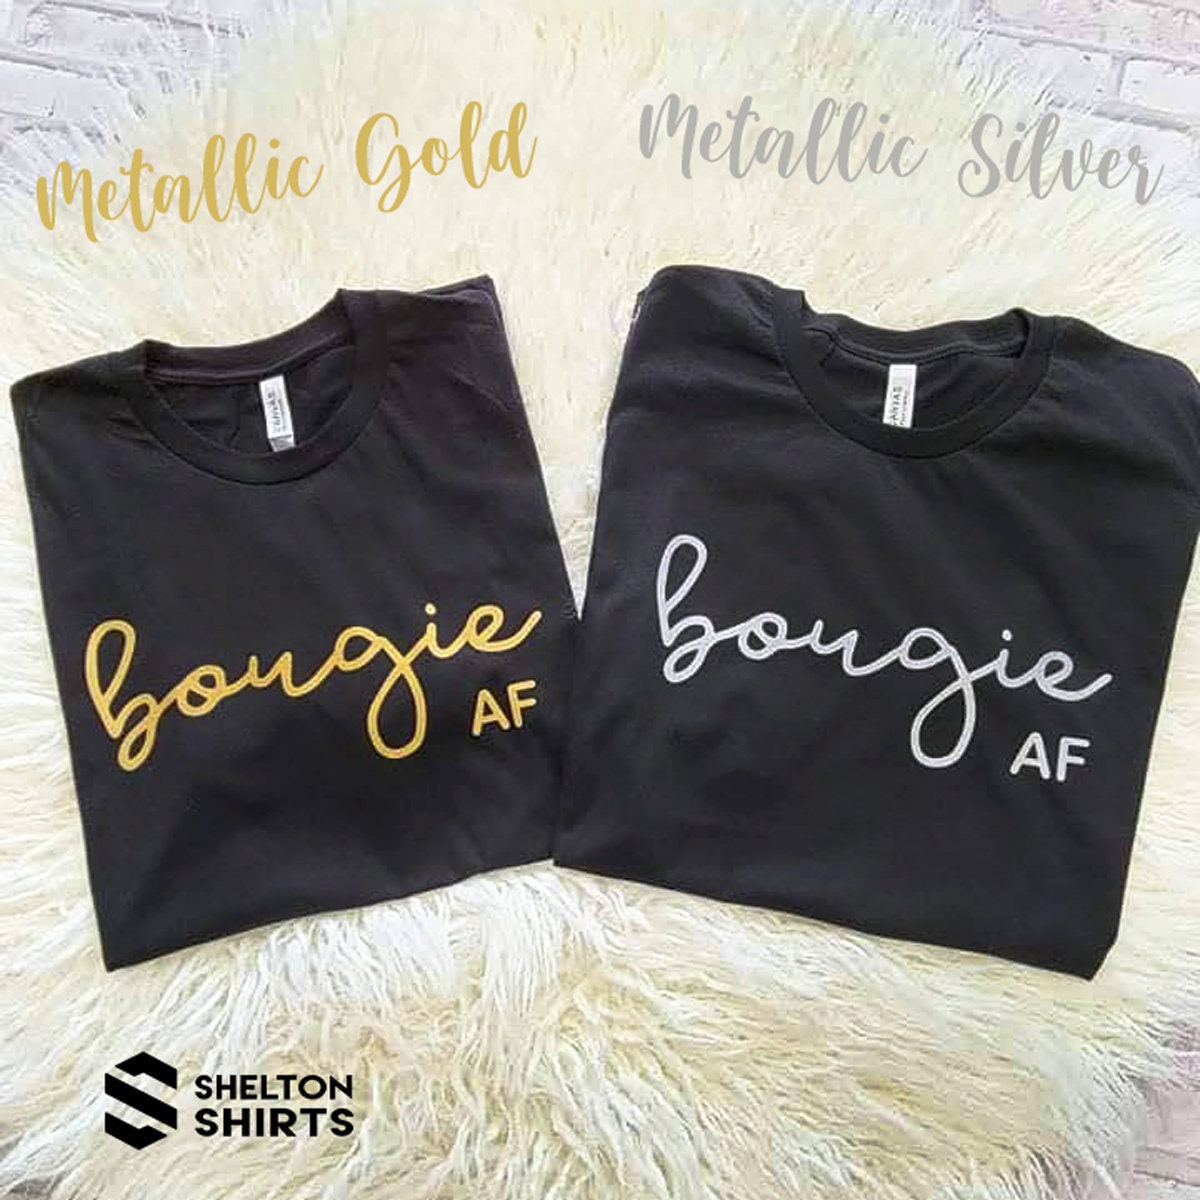 Bougie AF Black Bella T-shirt with Rose Gold Metallic Print Cotton Comfy T-Shirt